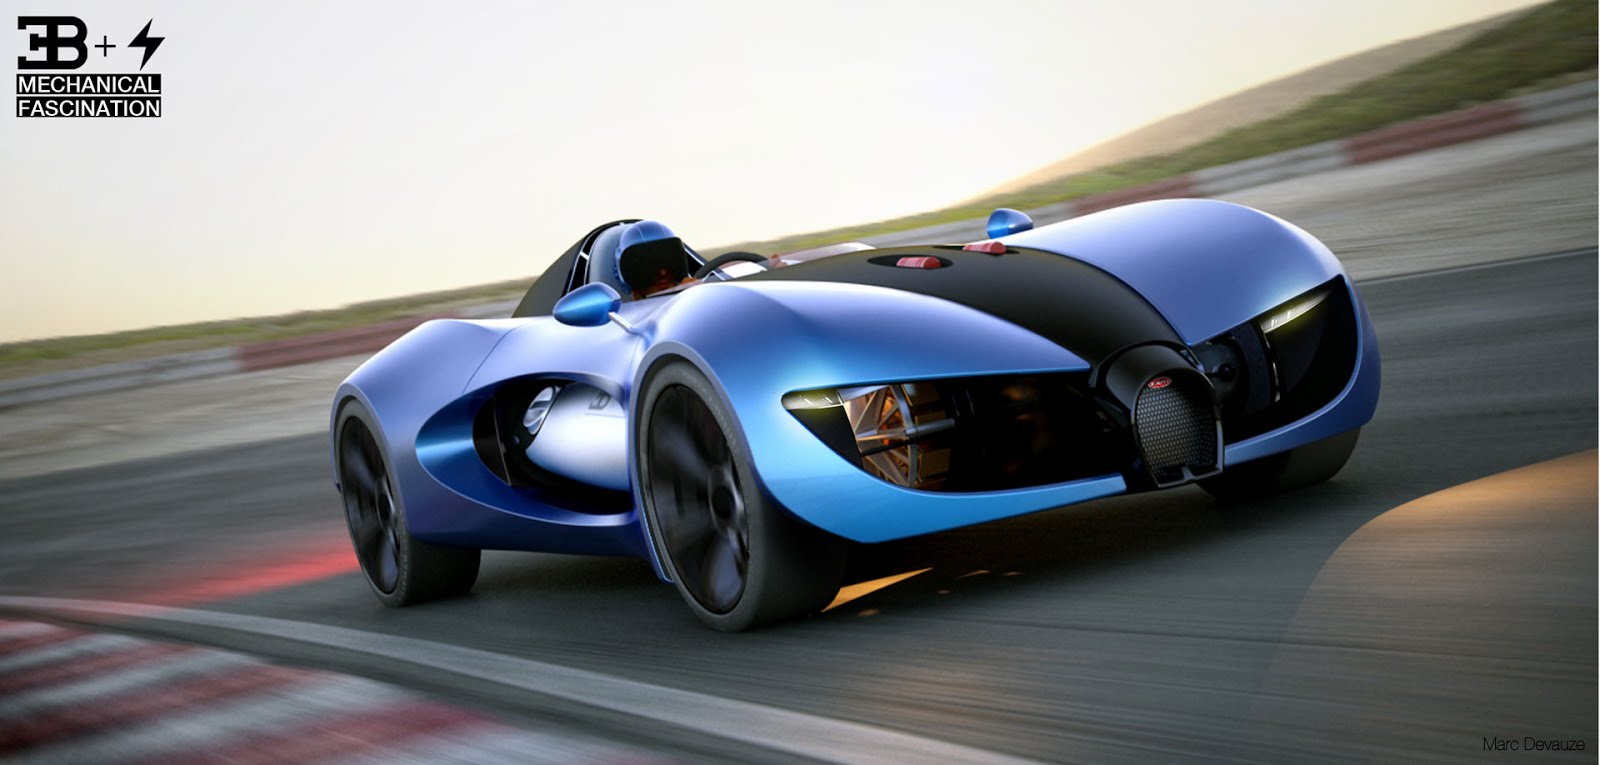 Bugatti Type Zero Electric Sports Car Concept  Electric Vehicle News